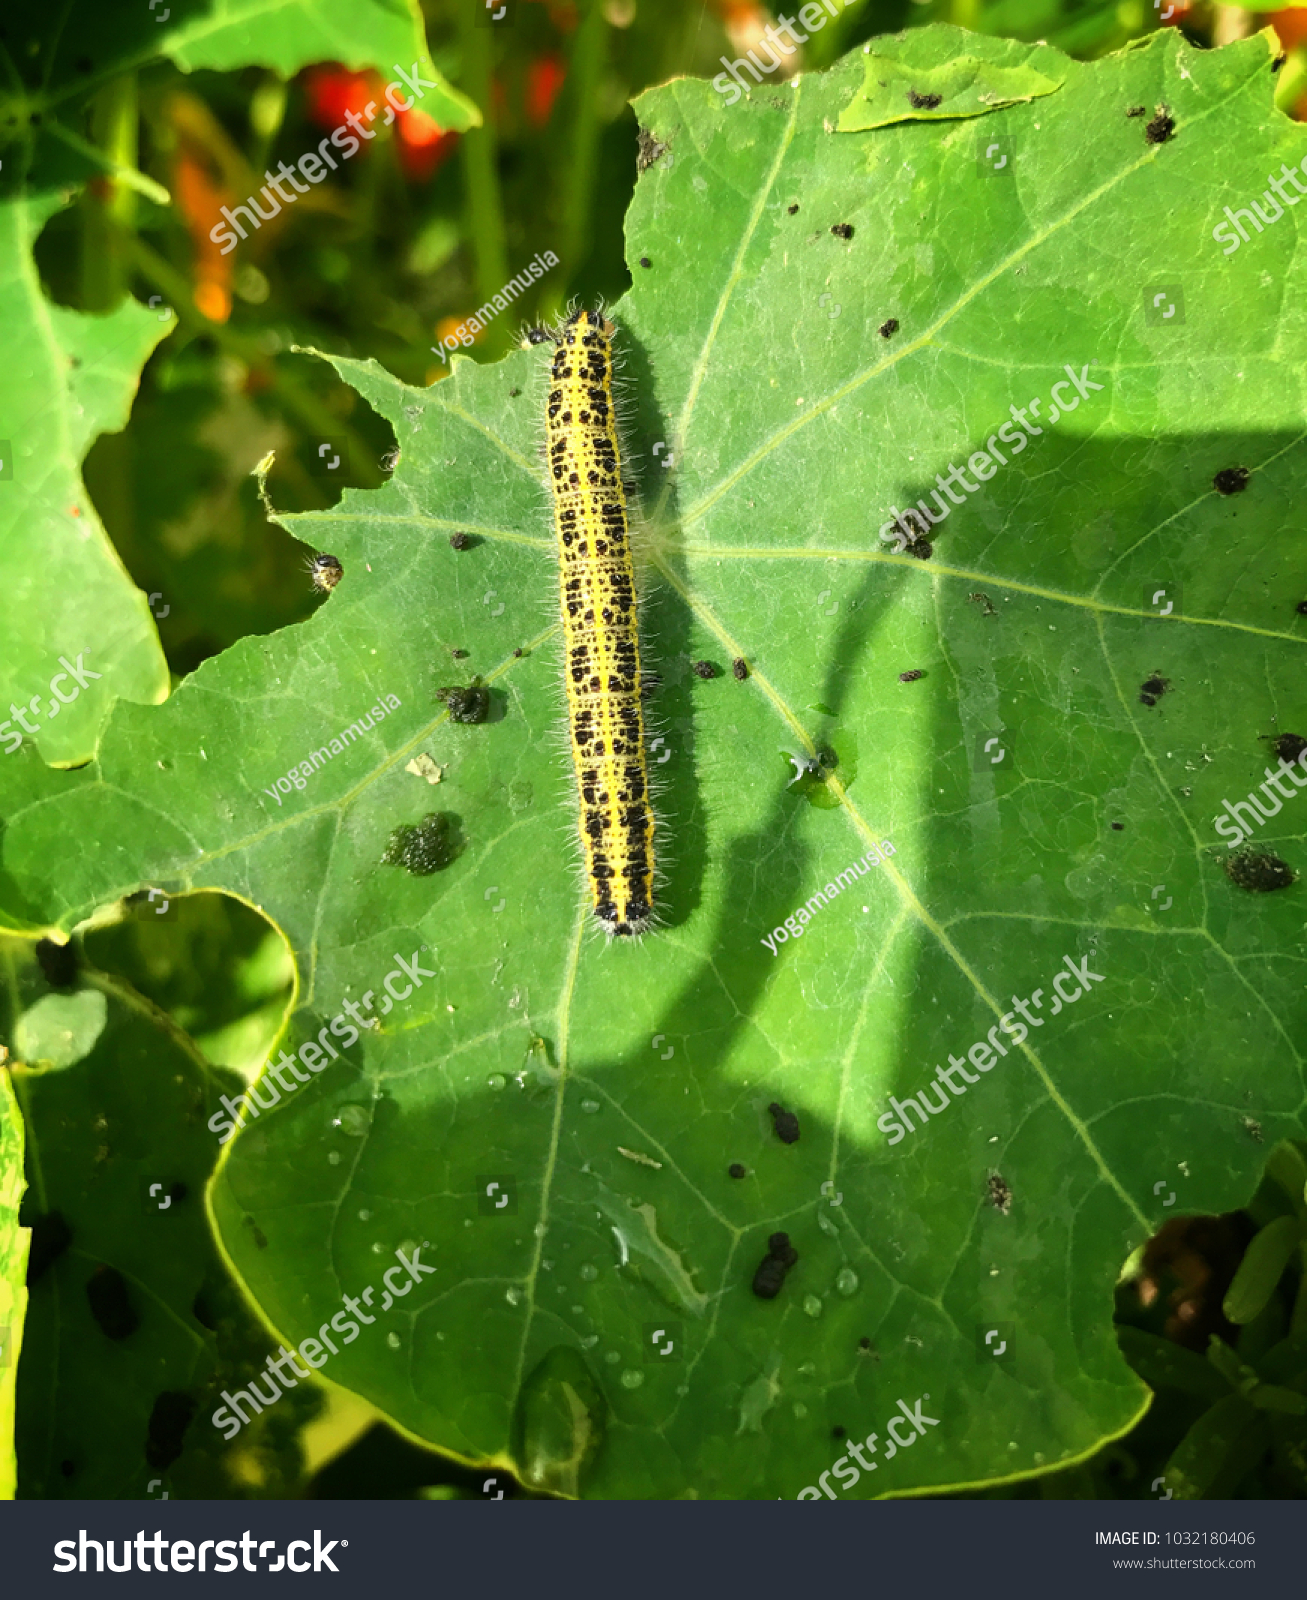 Caterpillar eating plants in the garden #1032180406